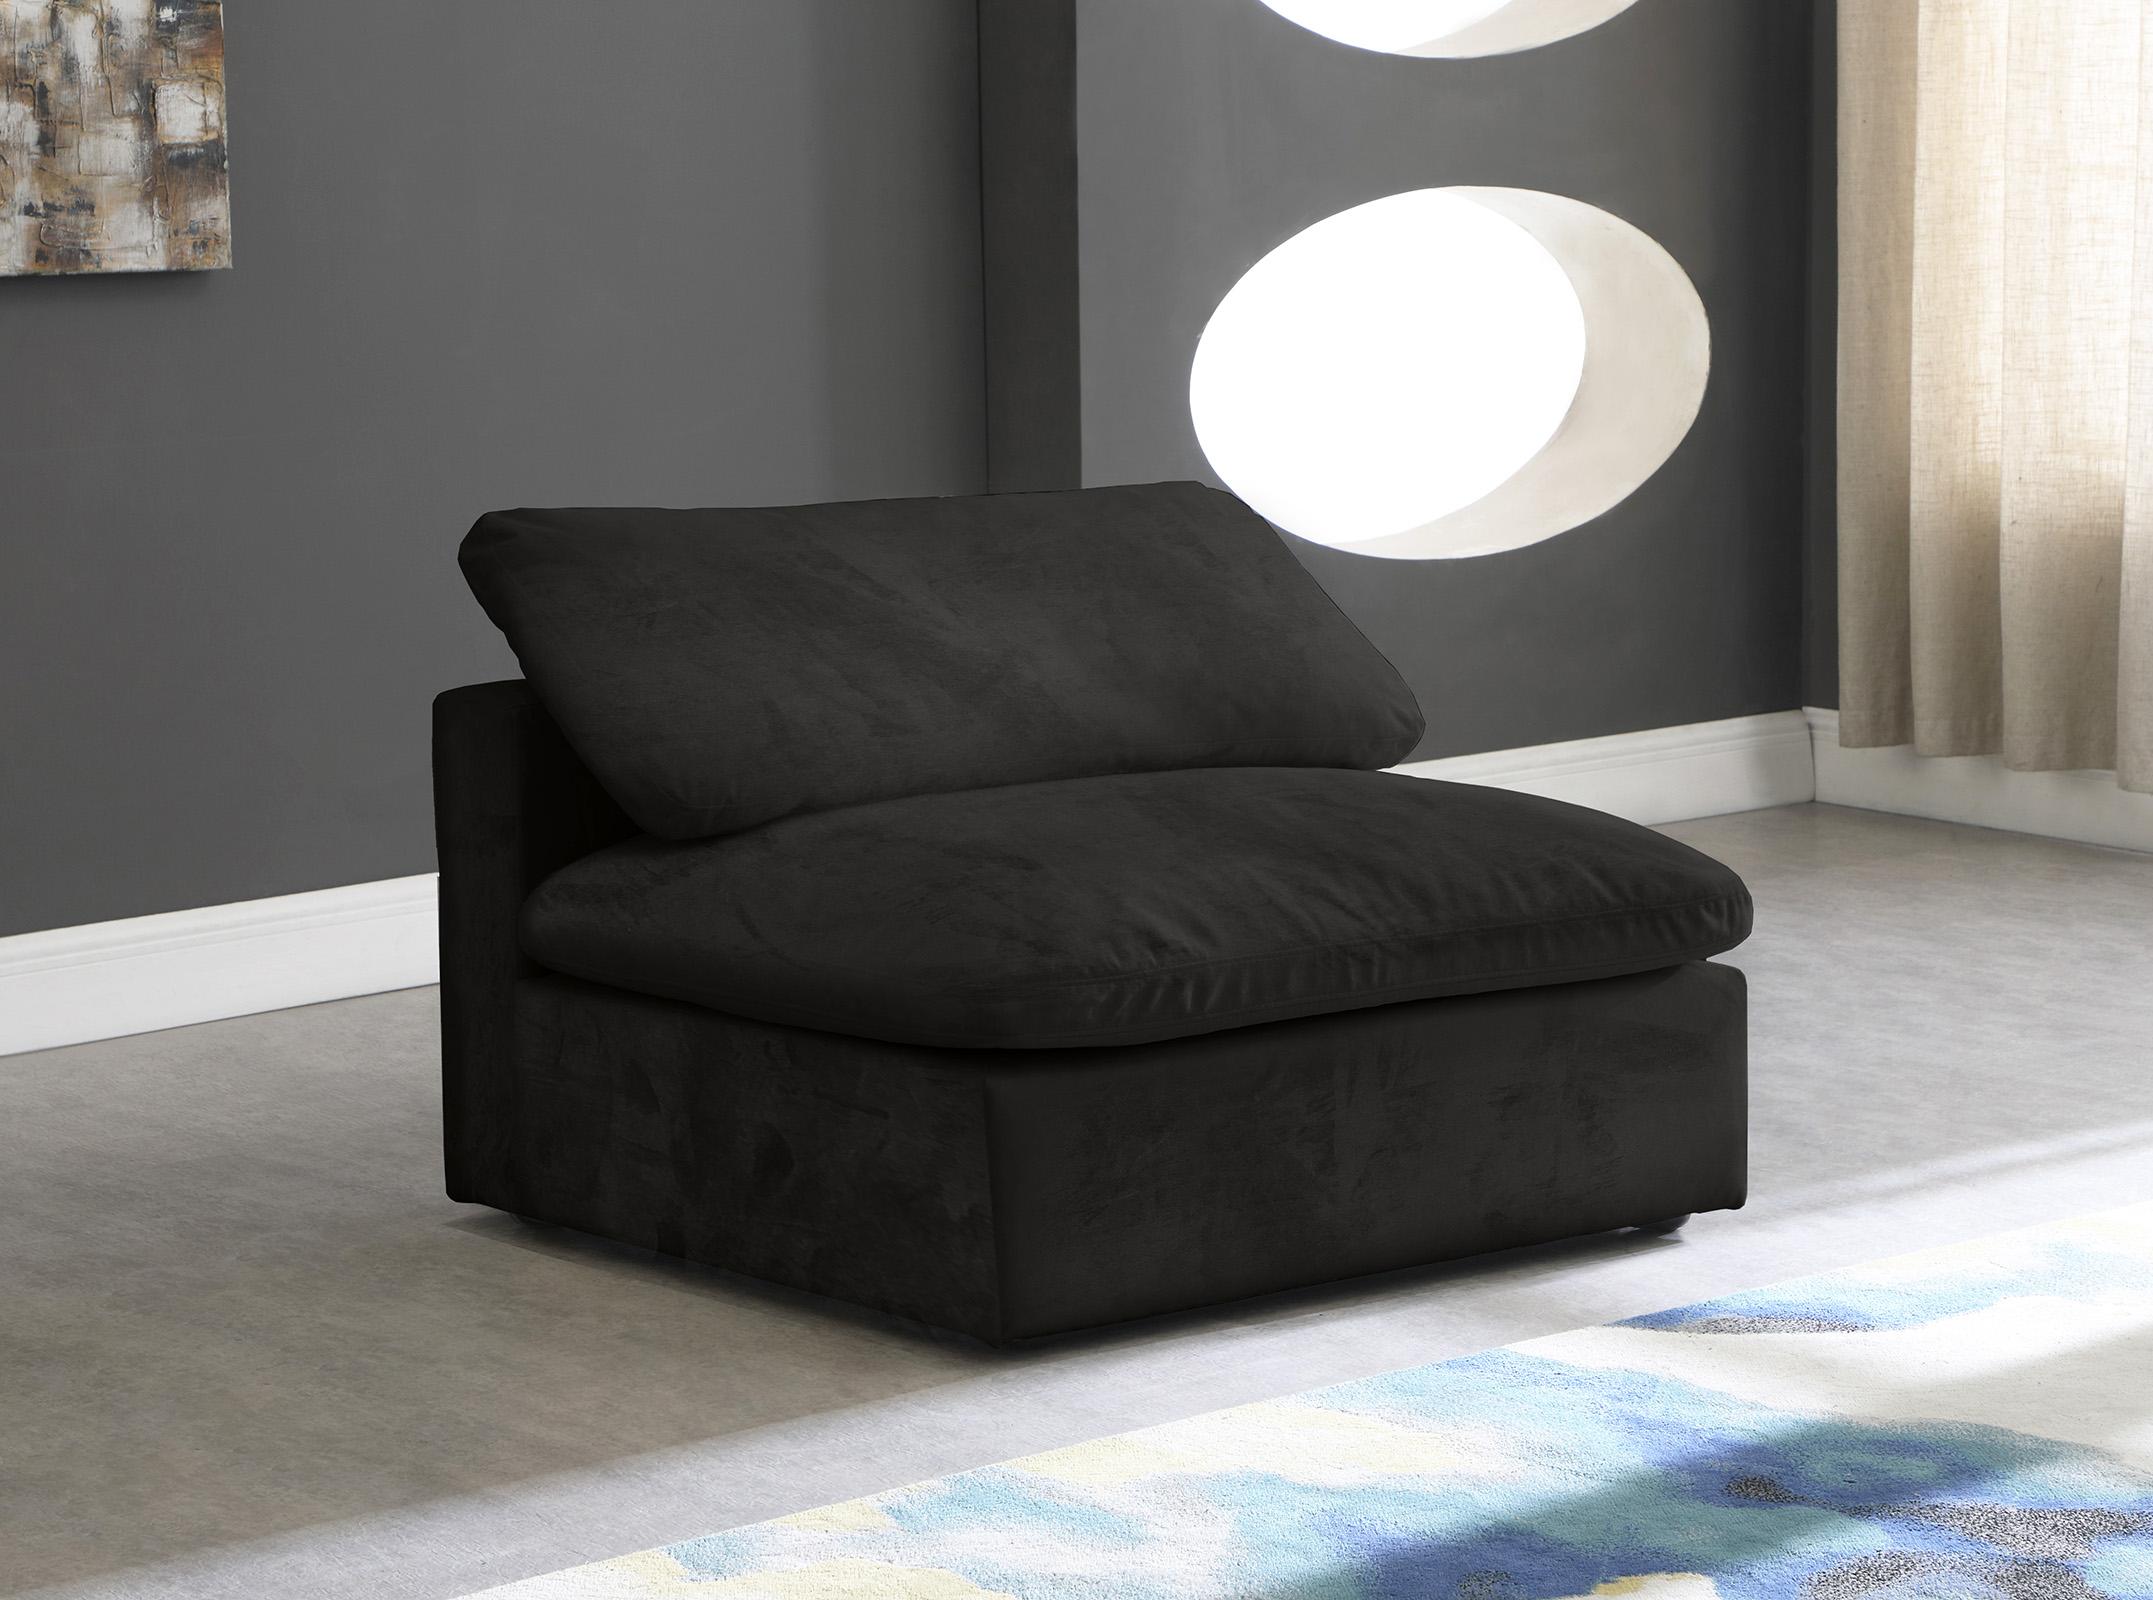 

    
Cozy Black Velvet Modular Fiber Filled Comfort Overstuffed Armless Chair Meridian
